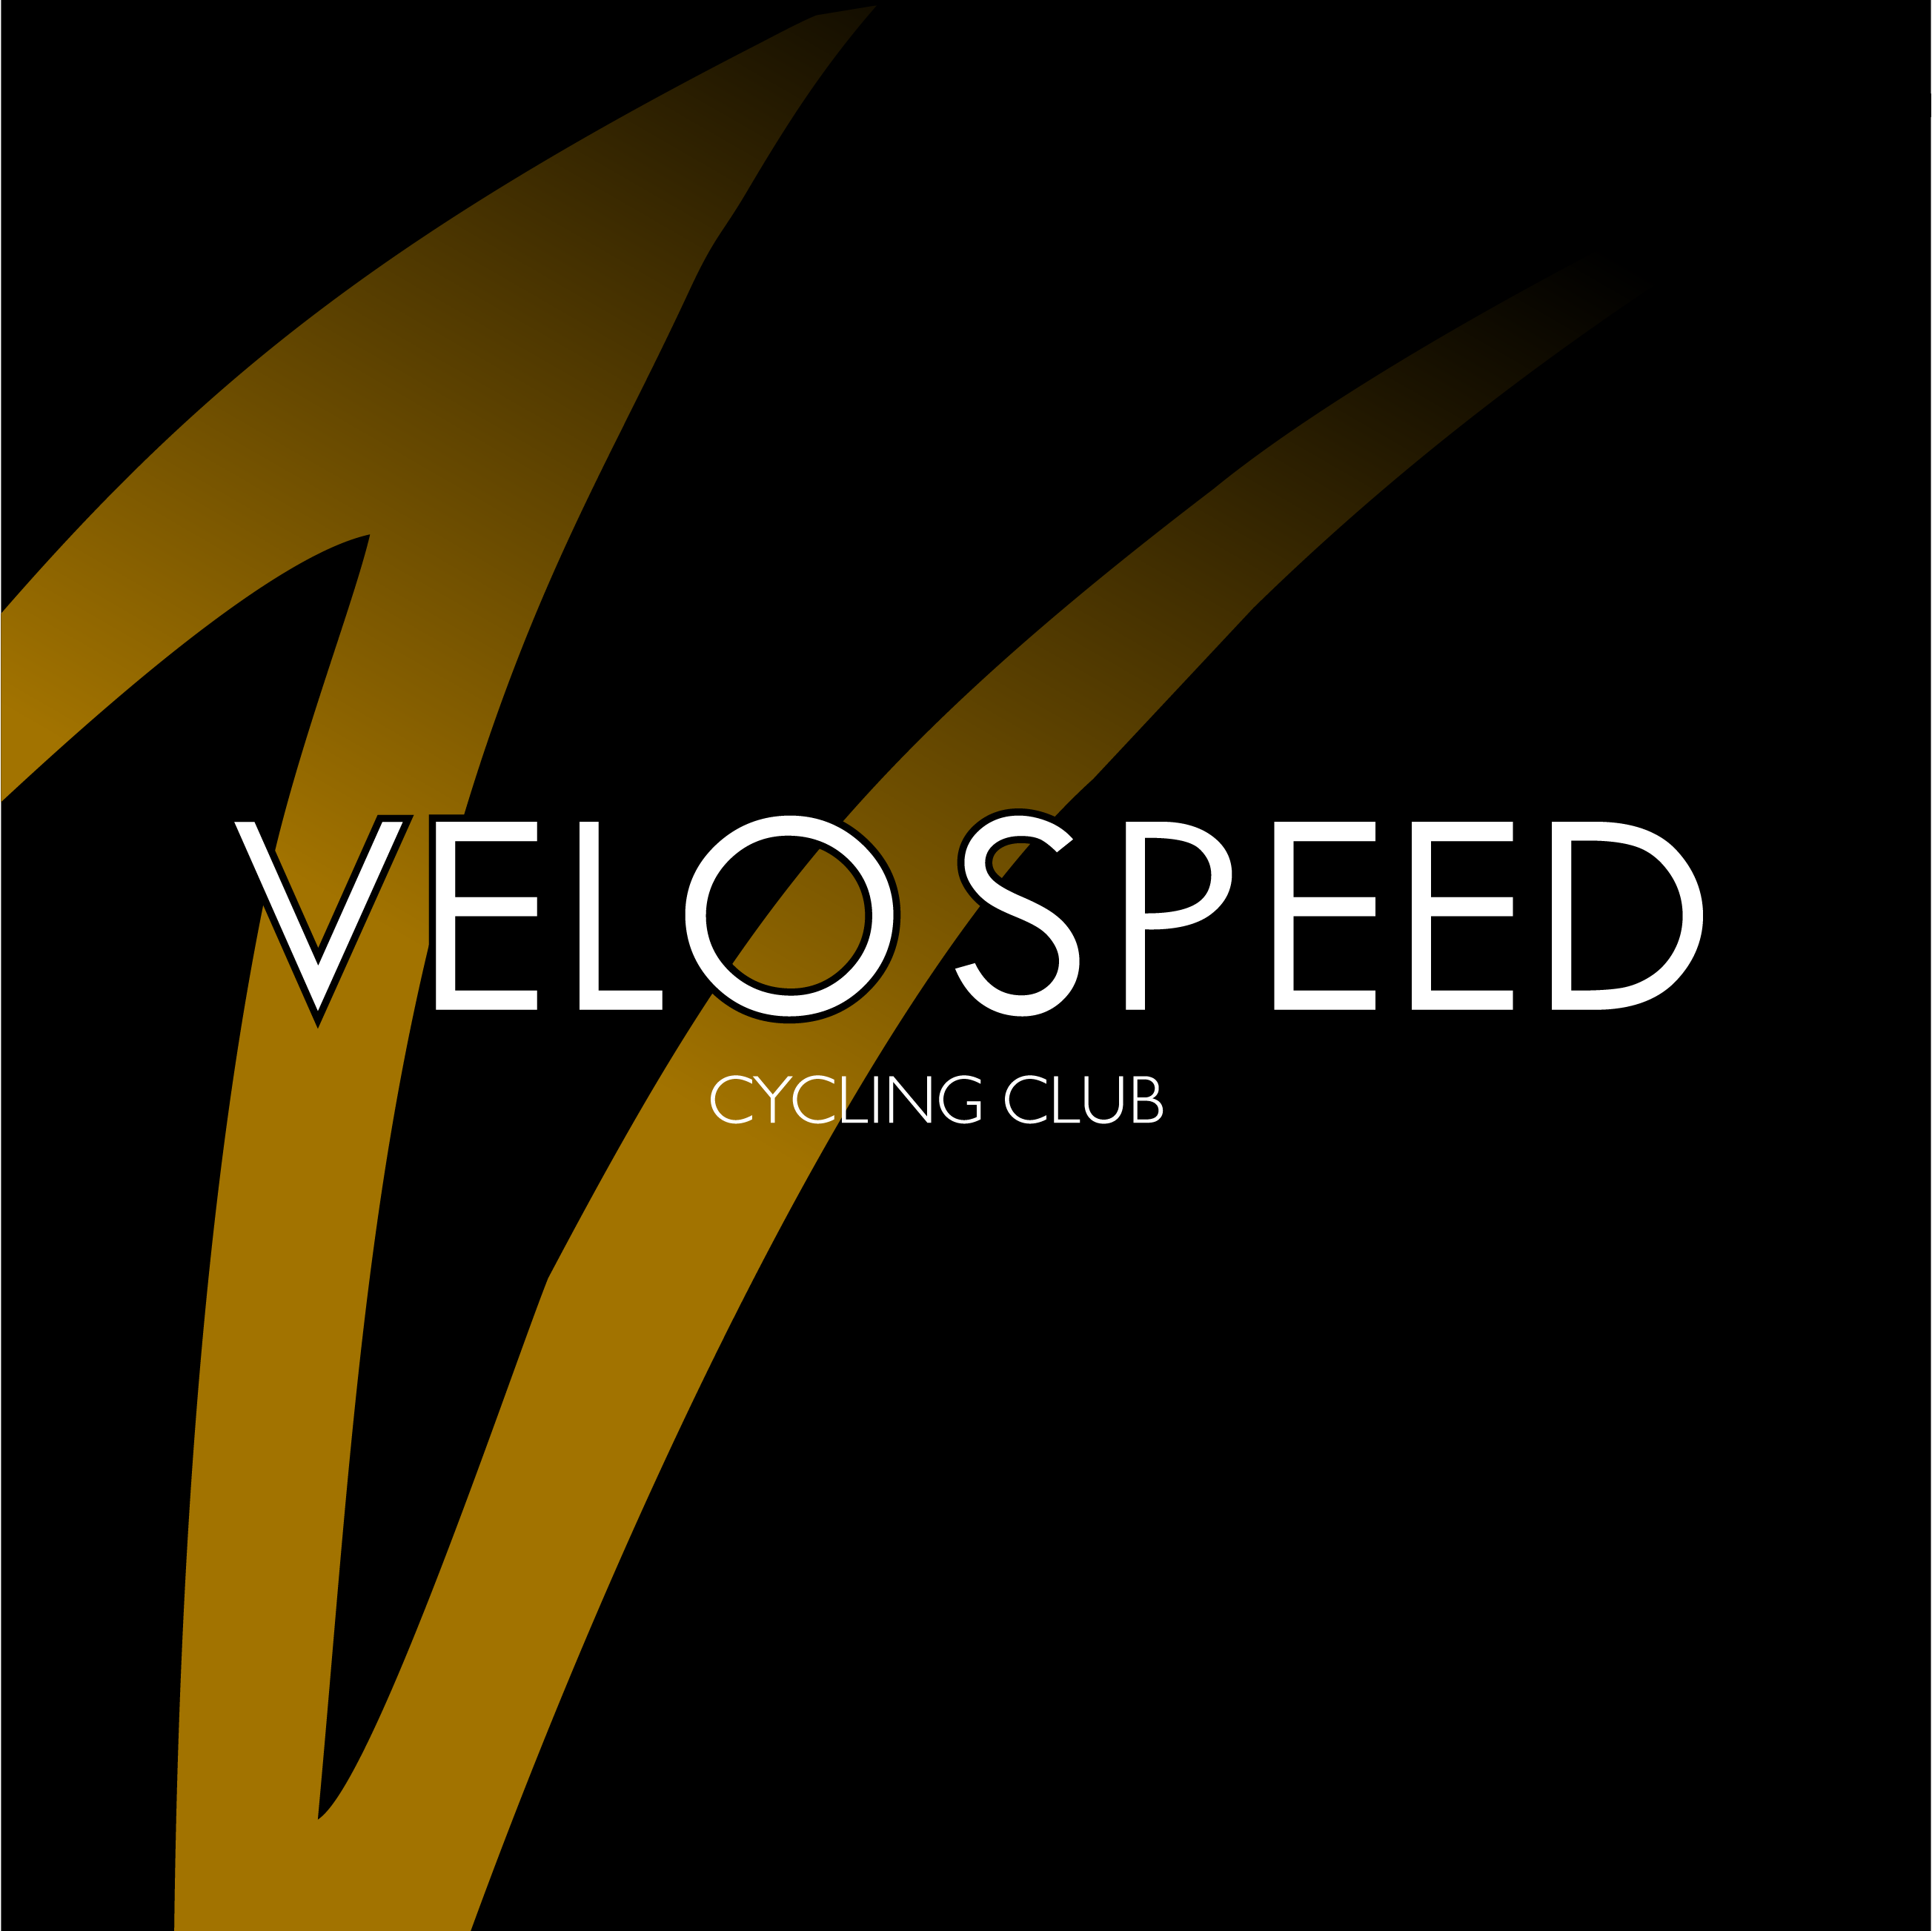 Club Image for VELOSPEED CYCLING CLUB